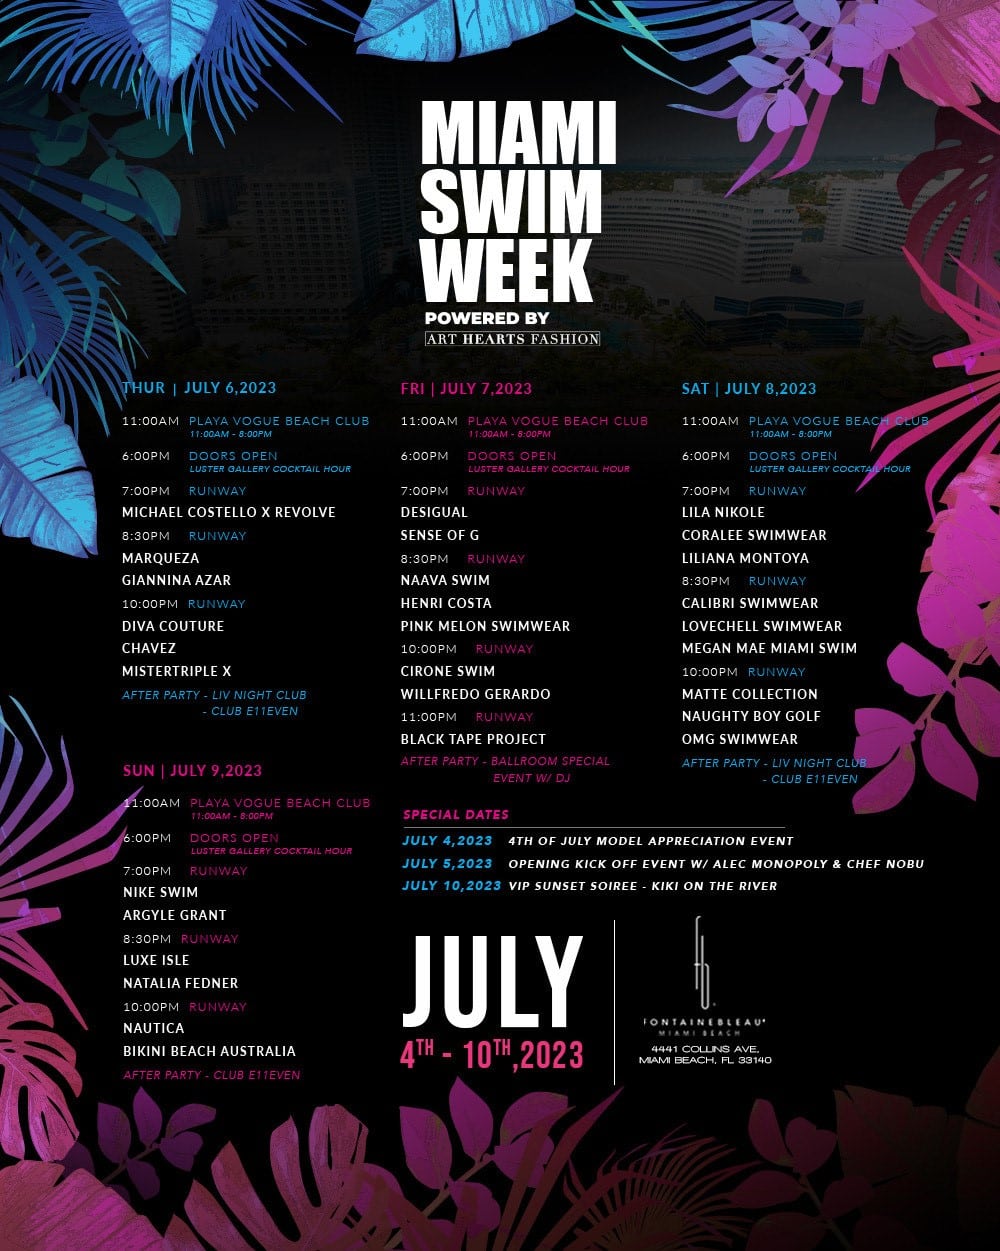 Miami Swim Week Powered by Art Hearts Fashion Returns to Miami Beach